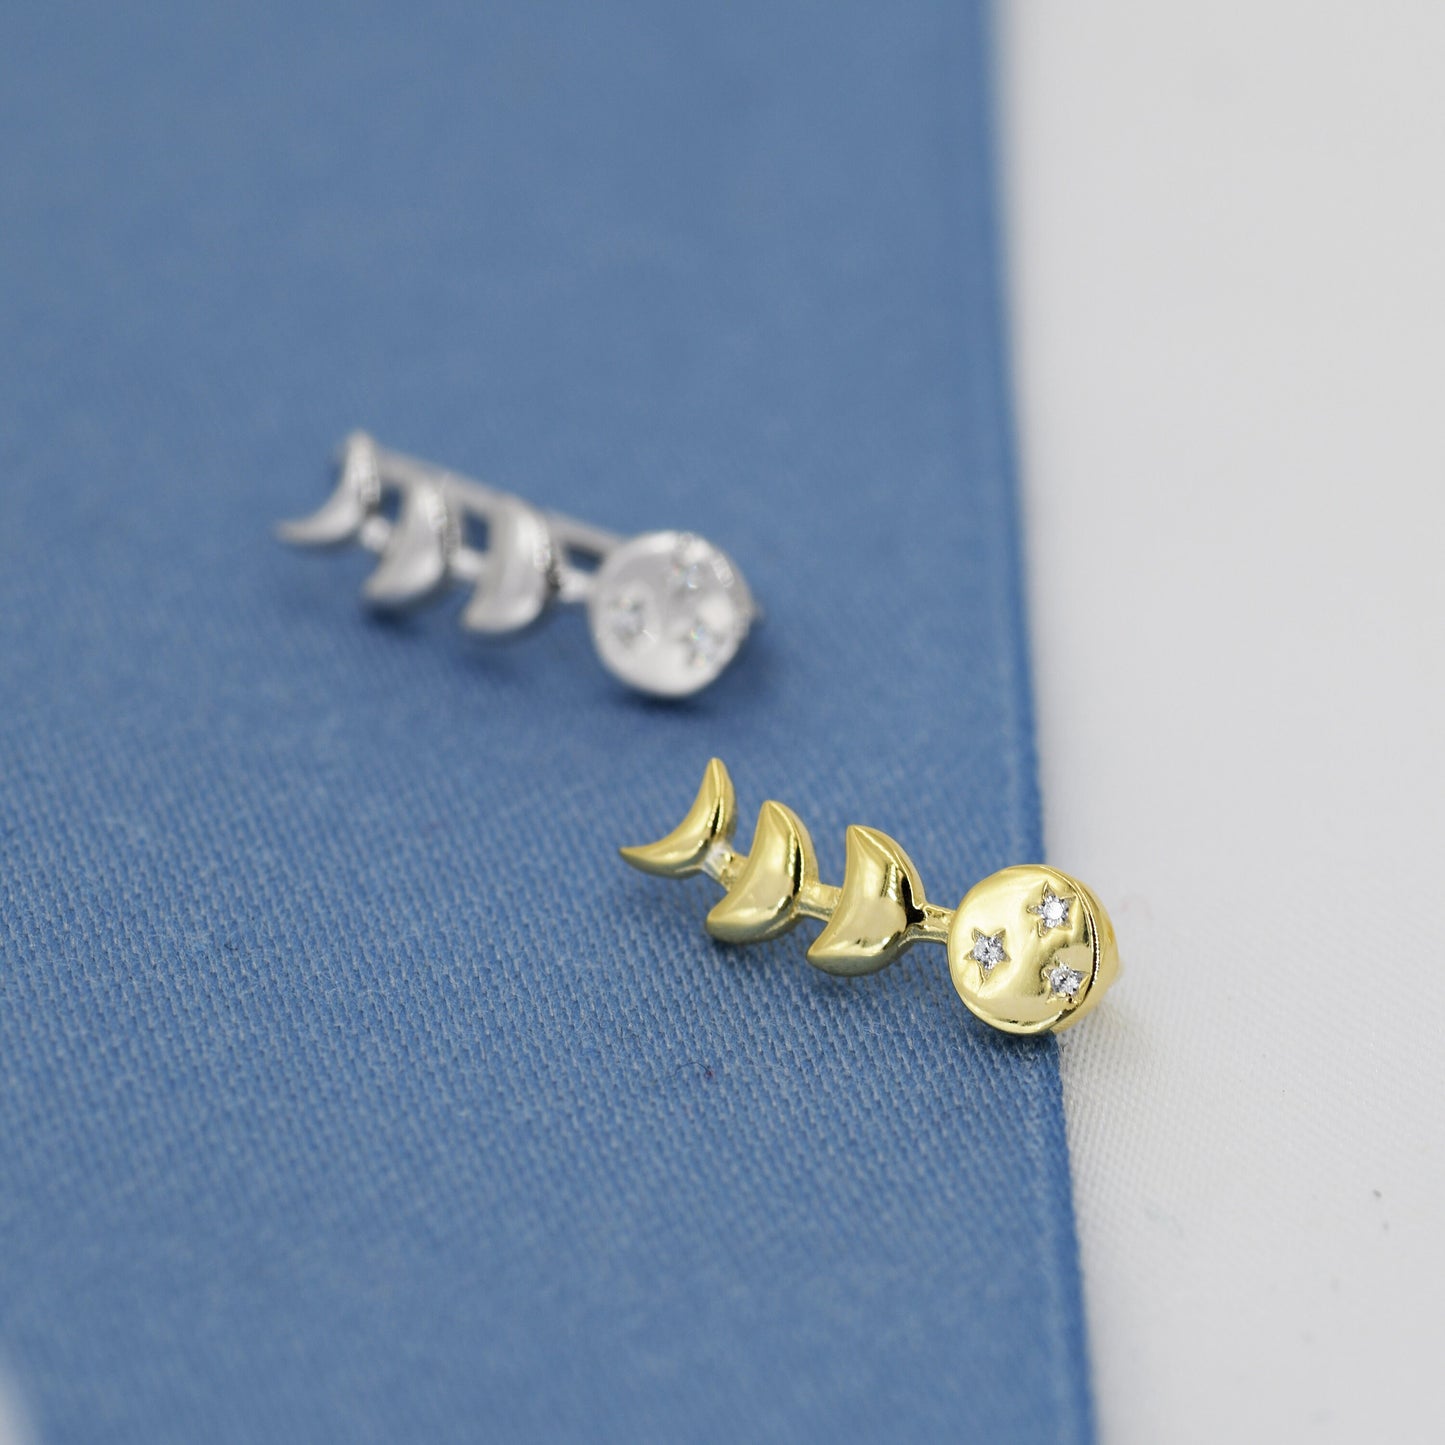 Moon Phase Crawler Earrings in Sterling Silver, Silver or Gold, Moon and Star Earrings, Ear Climbers, Celestial Earrings